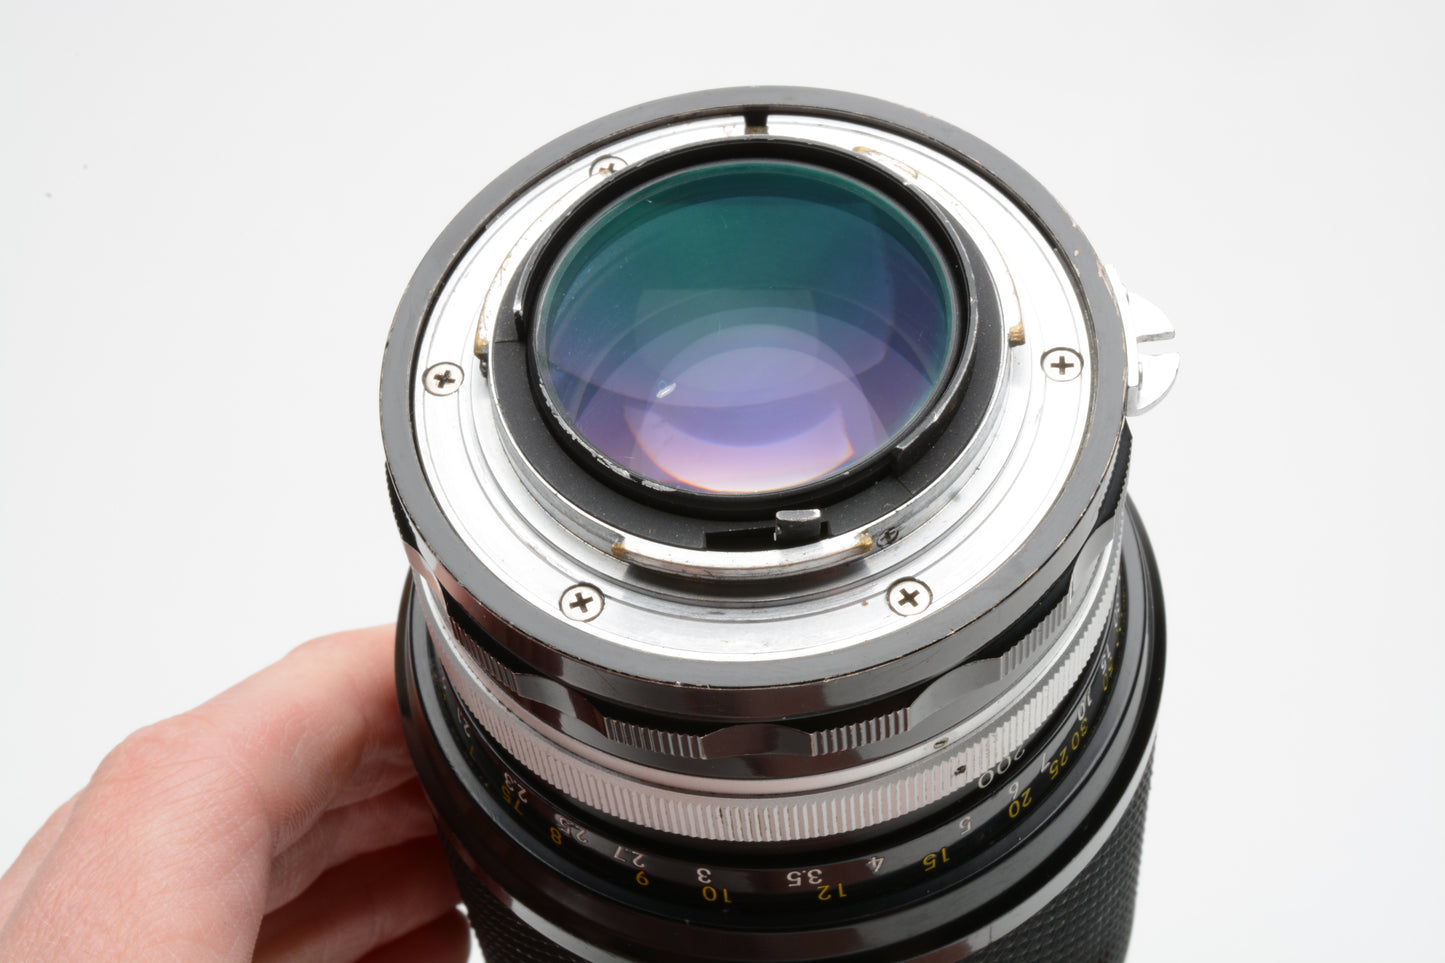 Nikon Nikkor C Zoom 80-200mm f4.5 telephoto zoom lens, caps, Bargain